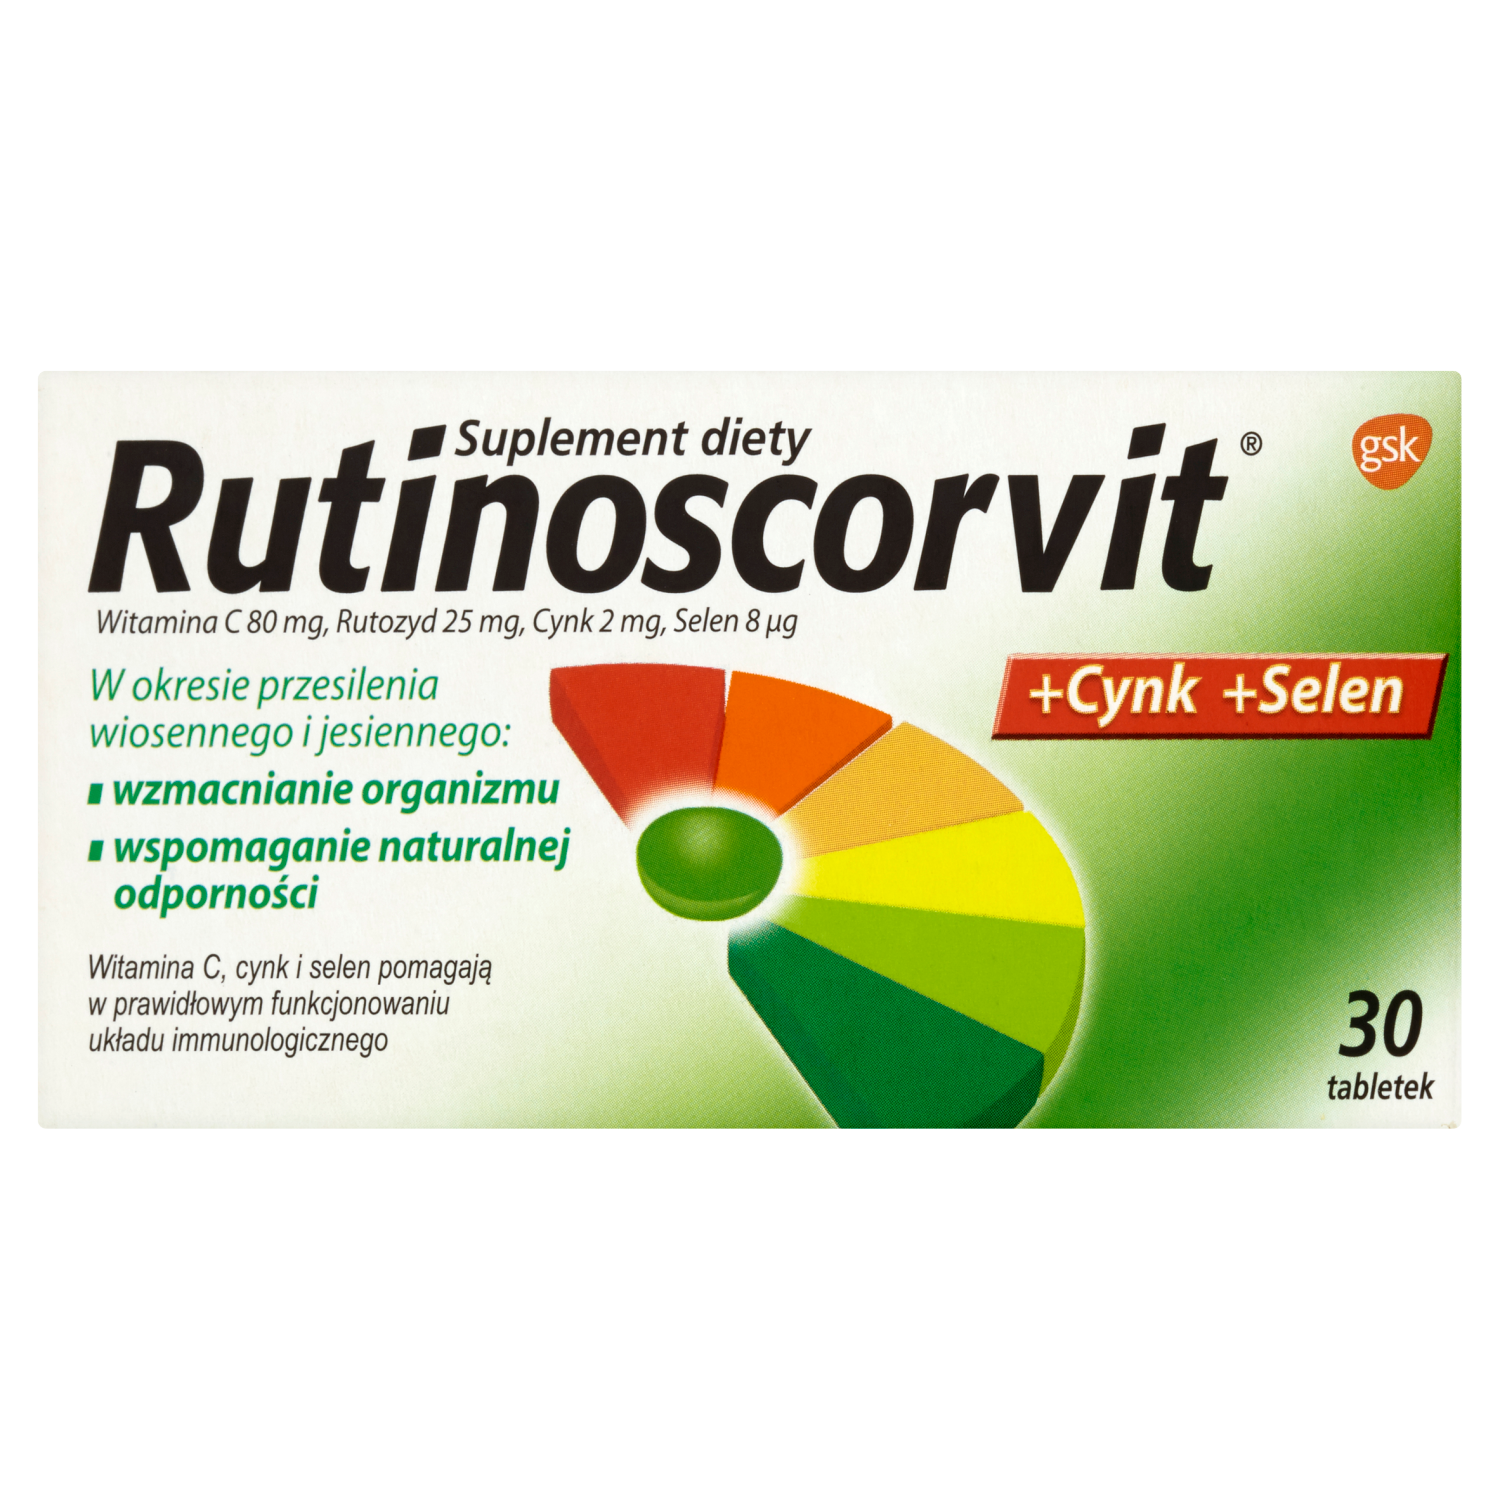 Rutinoscorvit биологически активная добавка, 30 таблеток/1 упаковка биологически активная добавка экко плюс бифидумбактерин 1000 30 таблеток